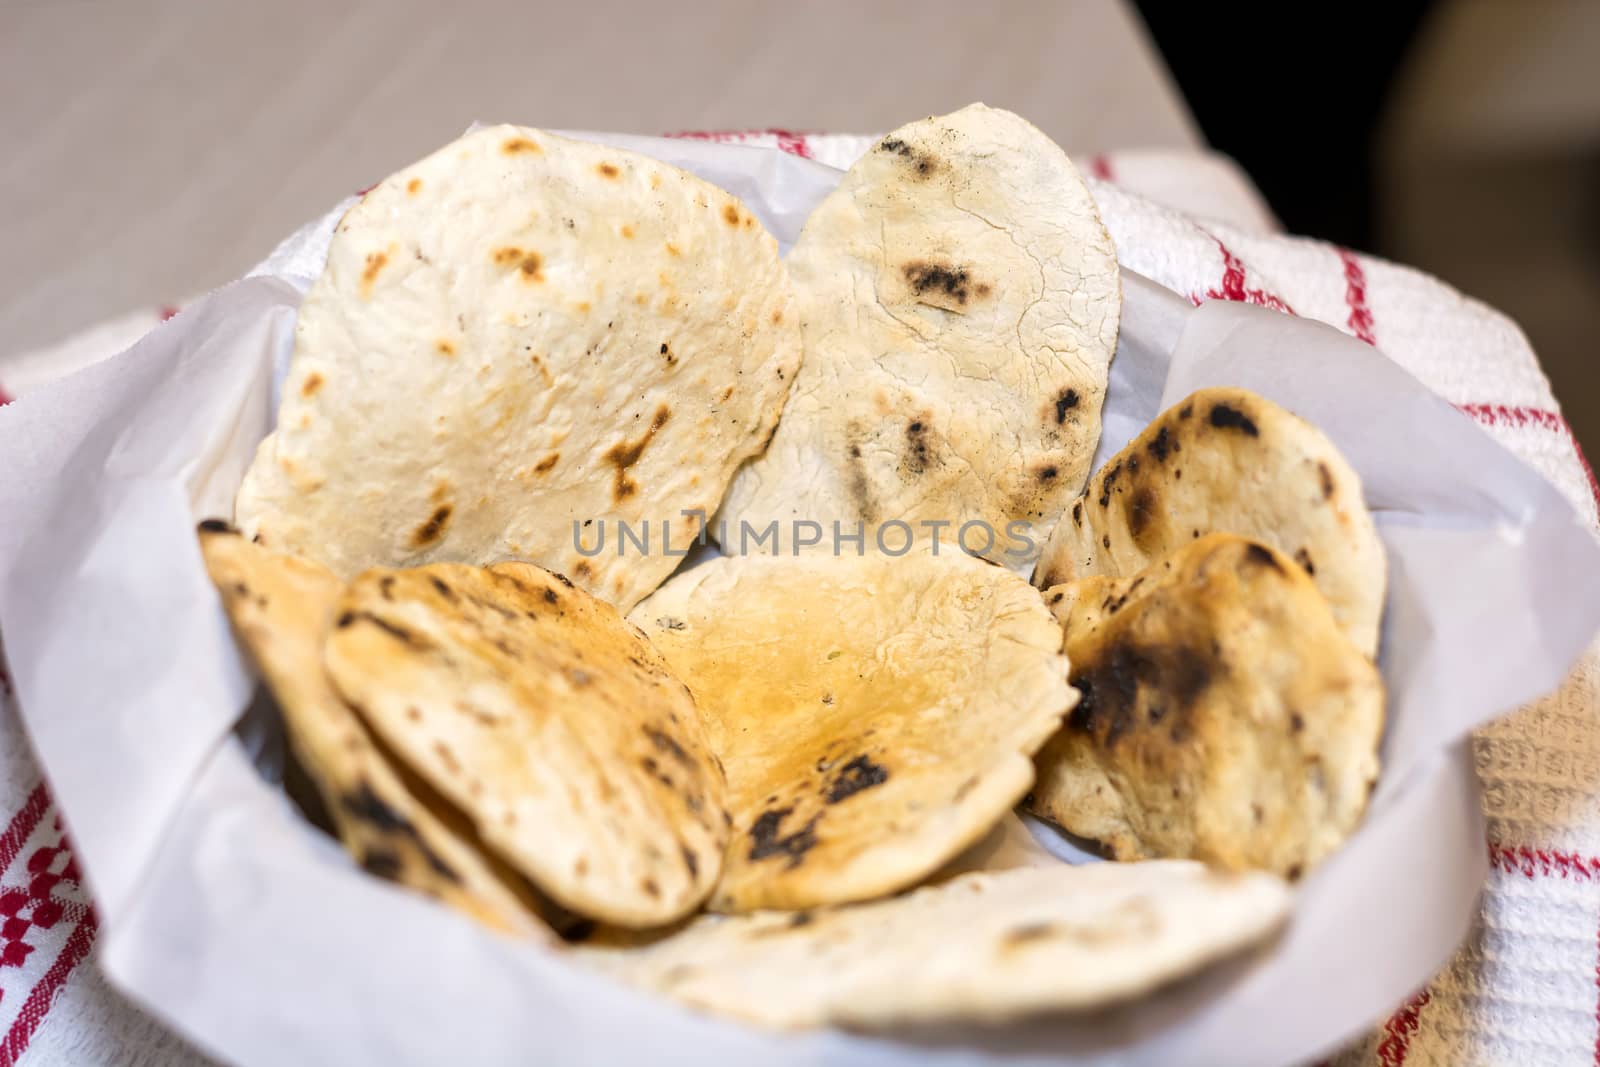 Fresh unleavened bread by rarrarorro